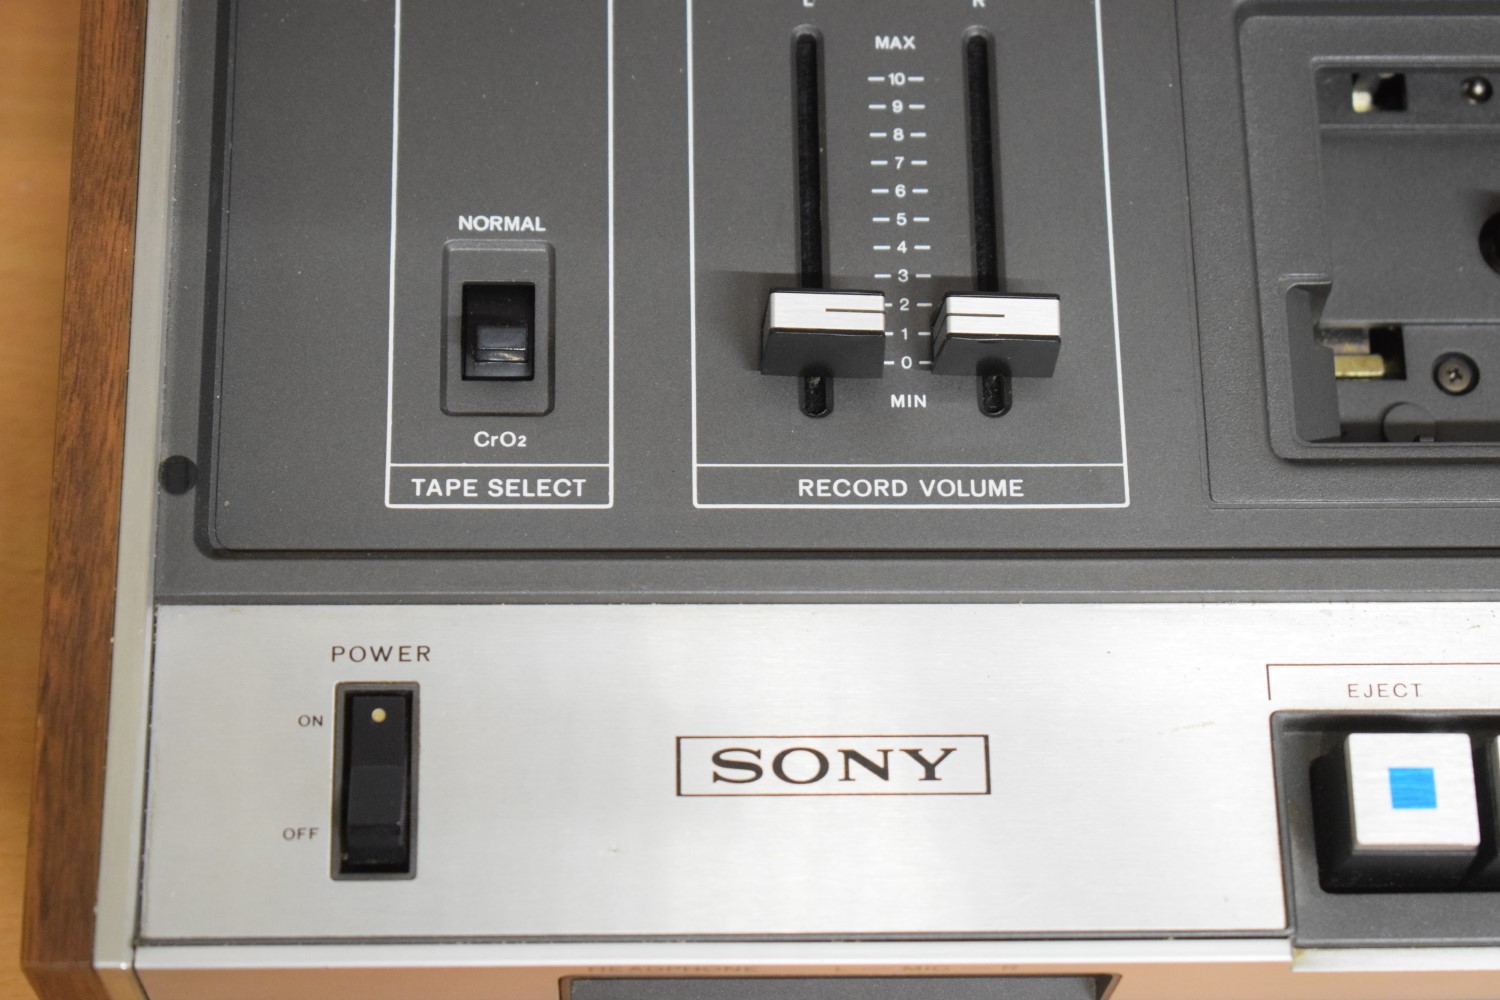 Sony TC-129 Cassette Deck